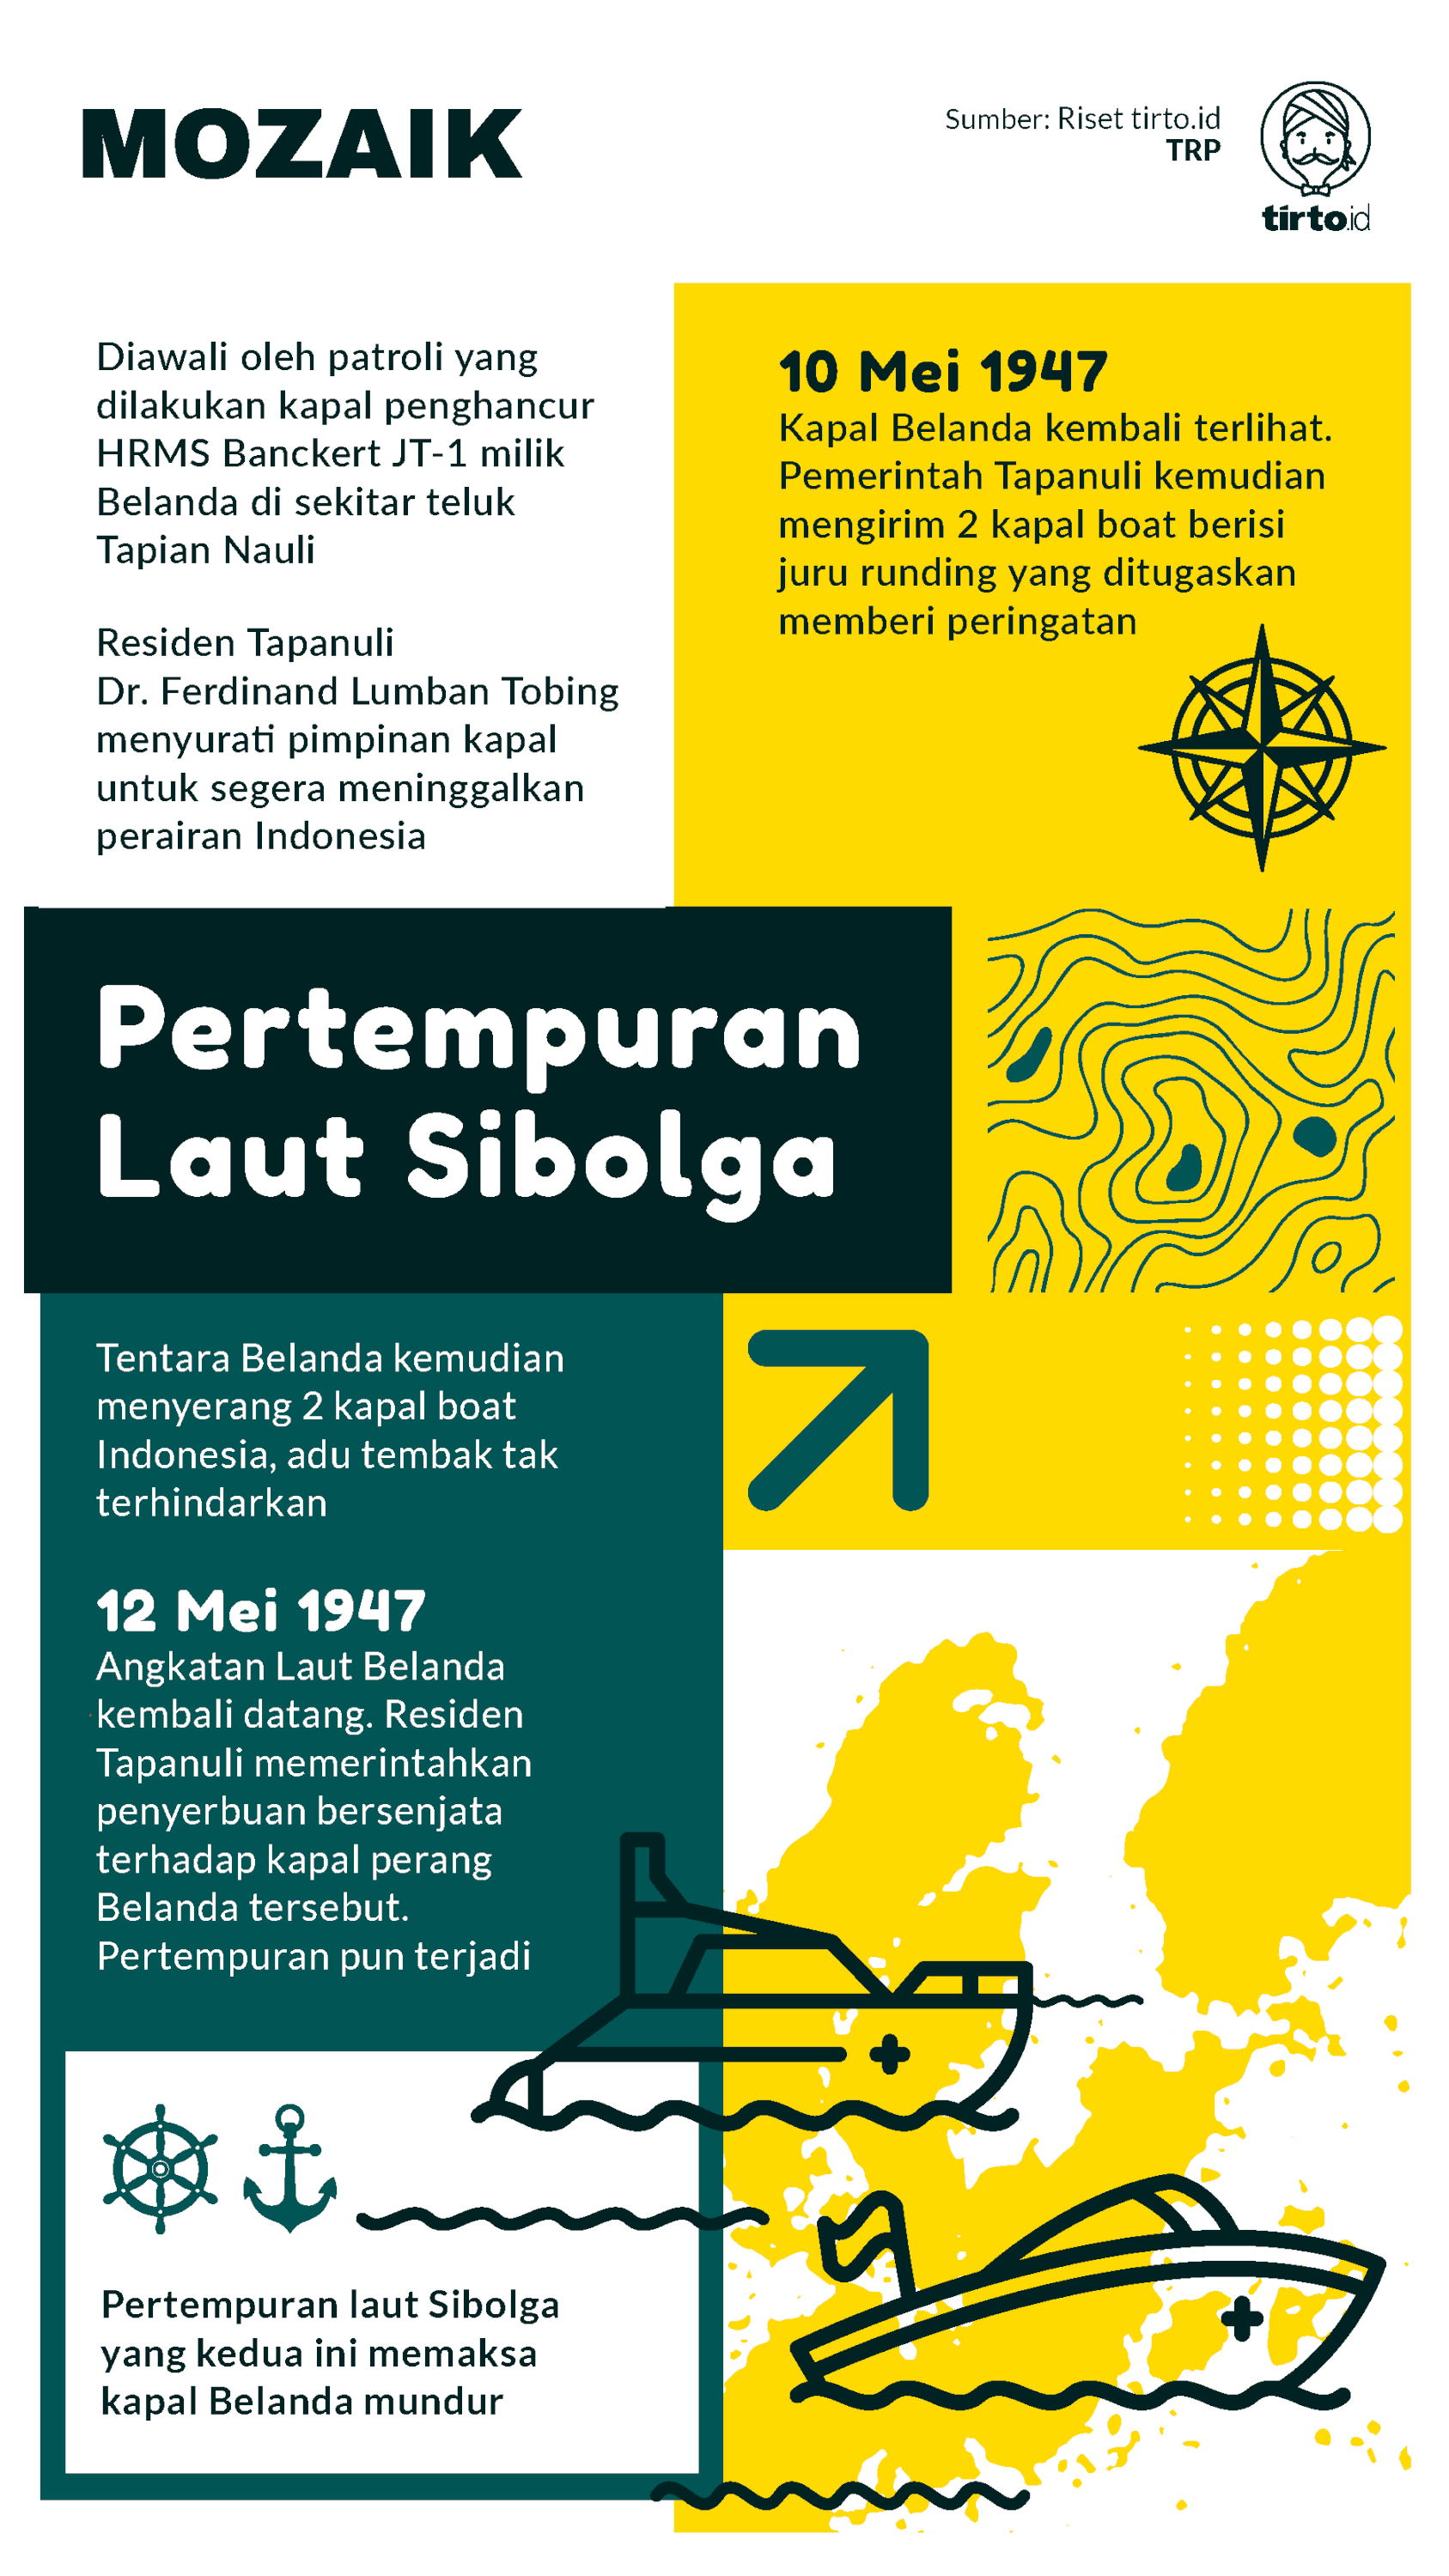 Infografik Mozaik Pertempuran Laut Sibolga